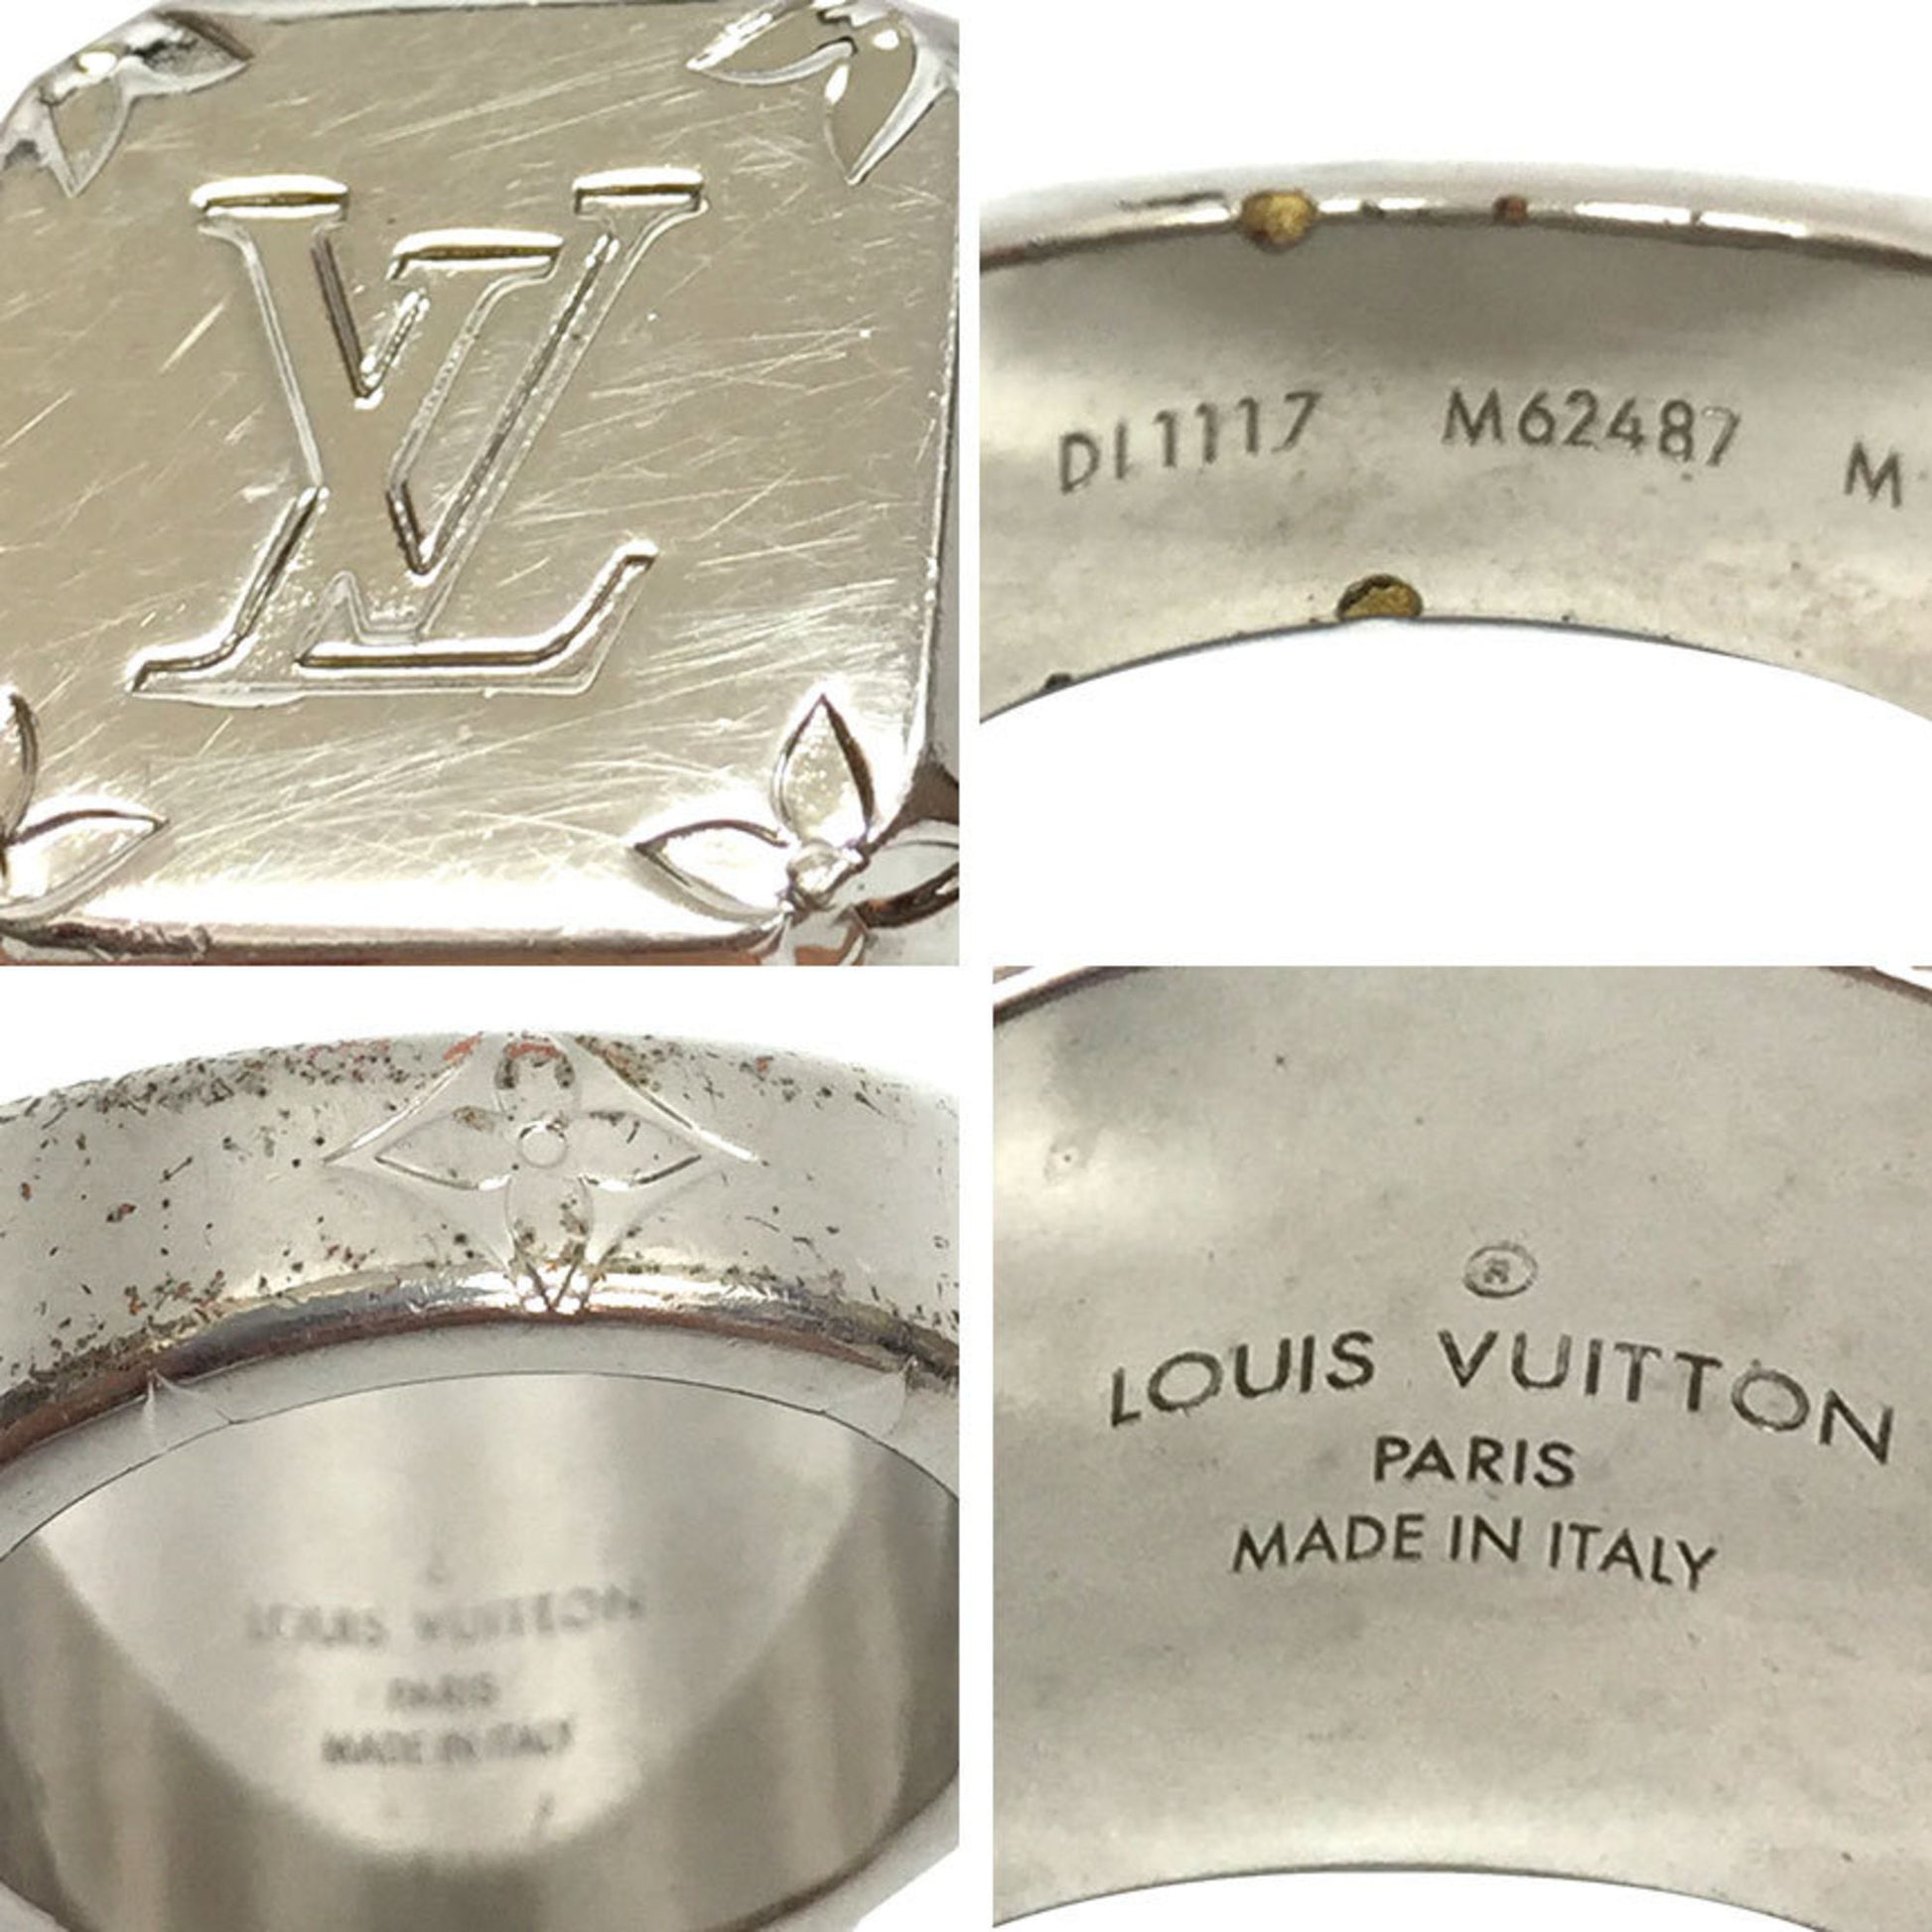 Shop Louis Vuitton MONOGRAM Monogram signet ring (M62487) by Twinkle☆JUICY